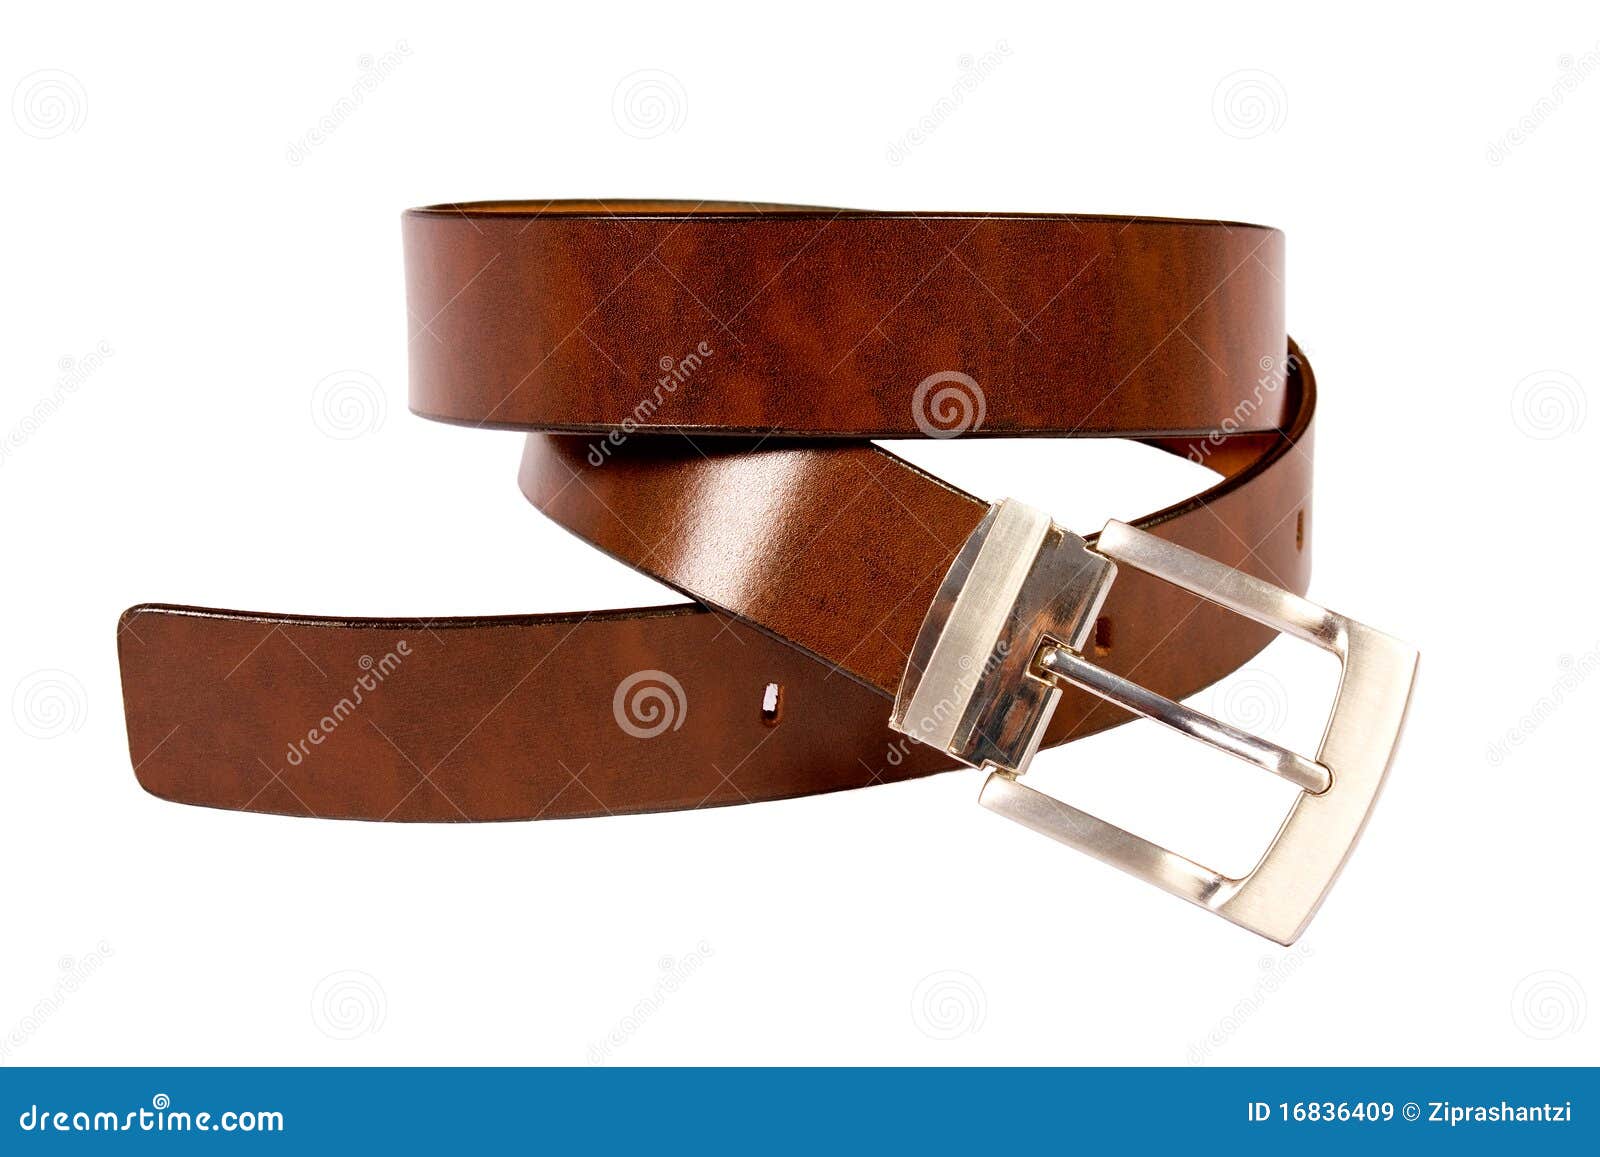 Belt strip stock image. Image of strap, grunge, grungy - 16836409